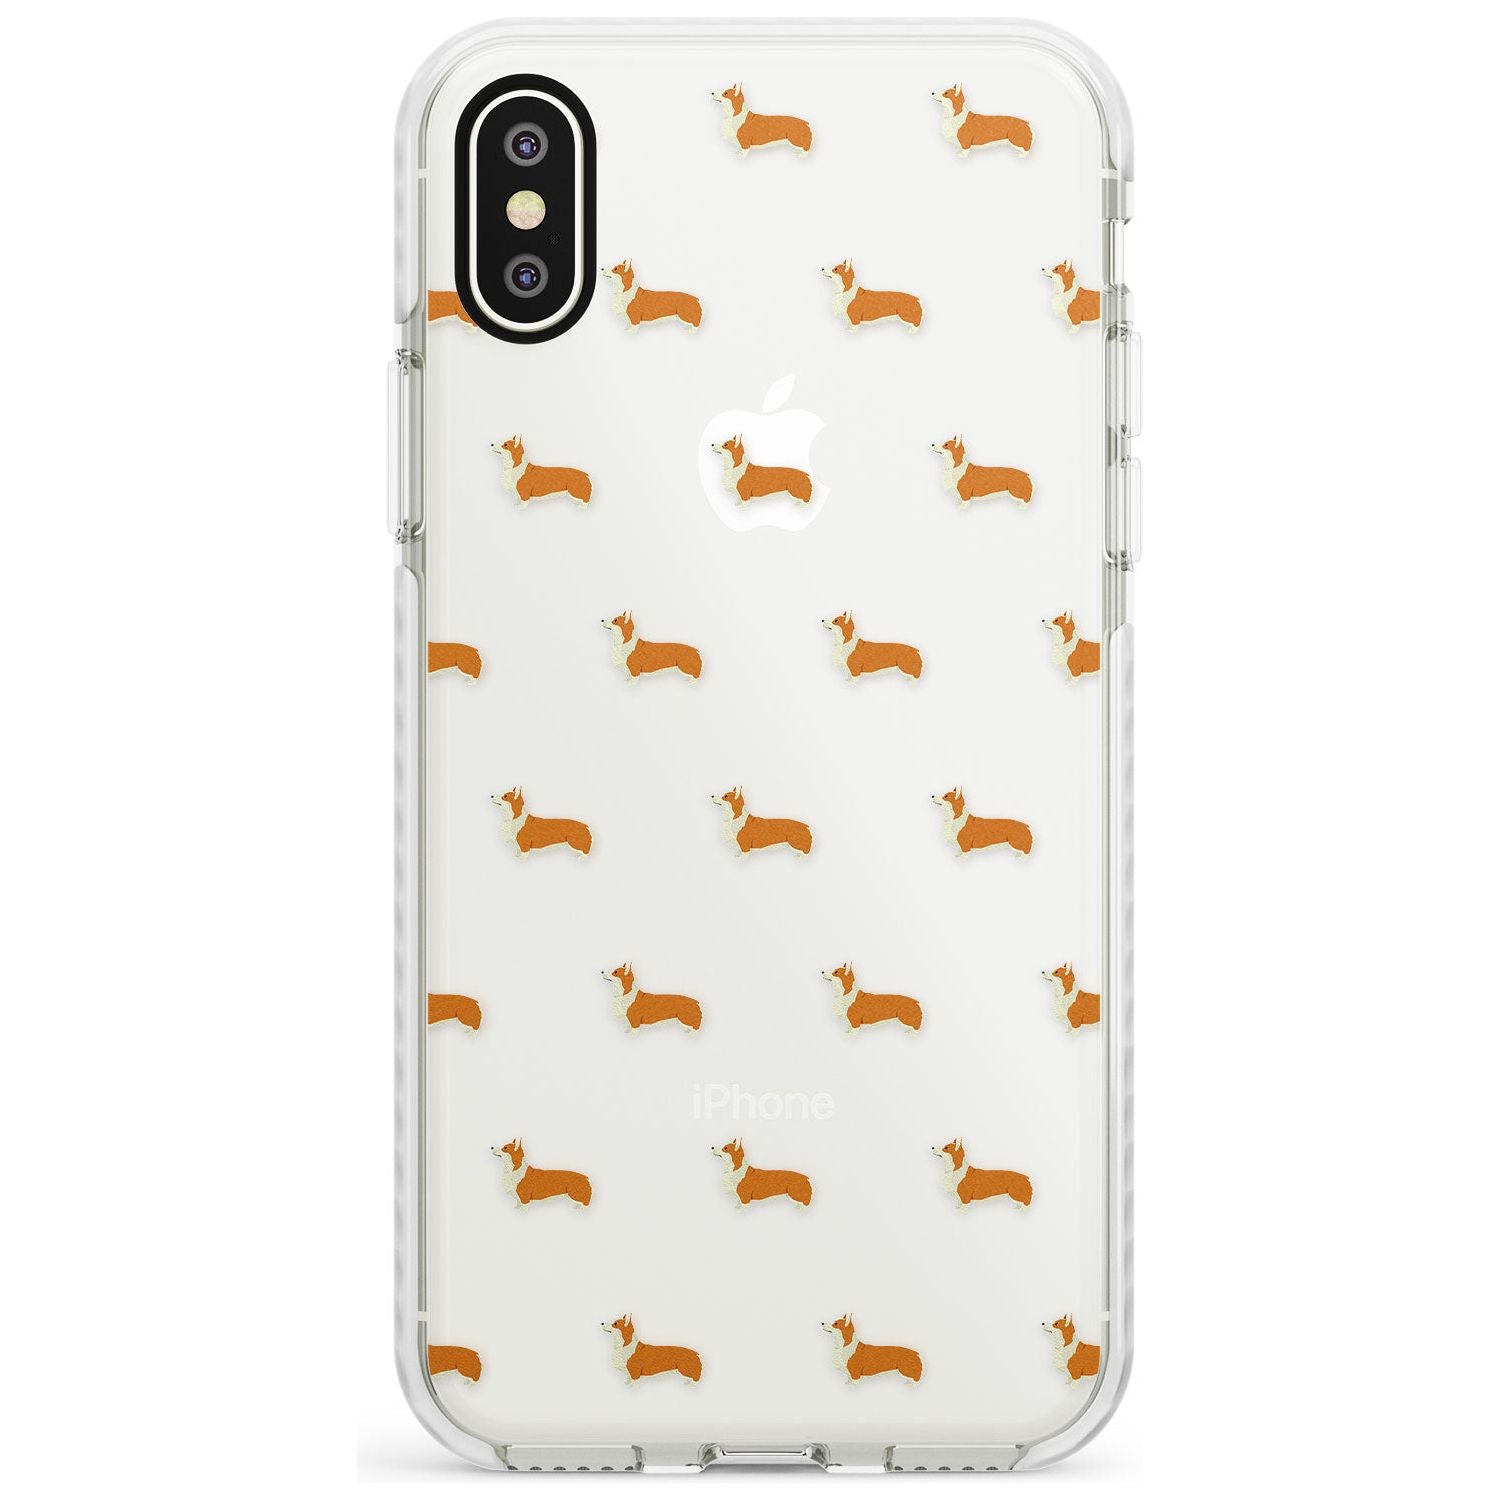 Pembroke Welsh Corgi Dog Pattern Clear Impact Phone Case for iPhone X XS Max XR